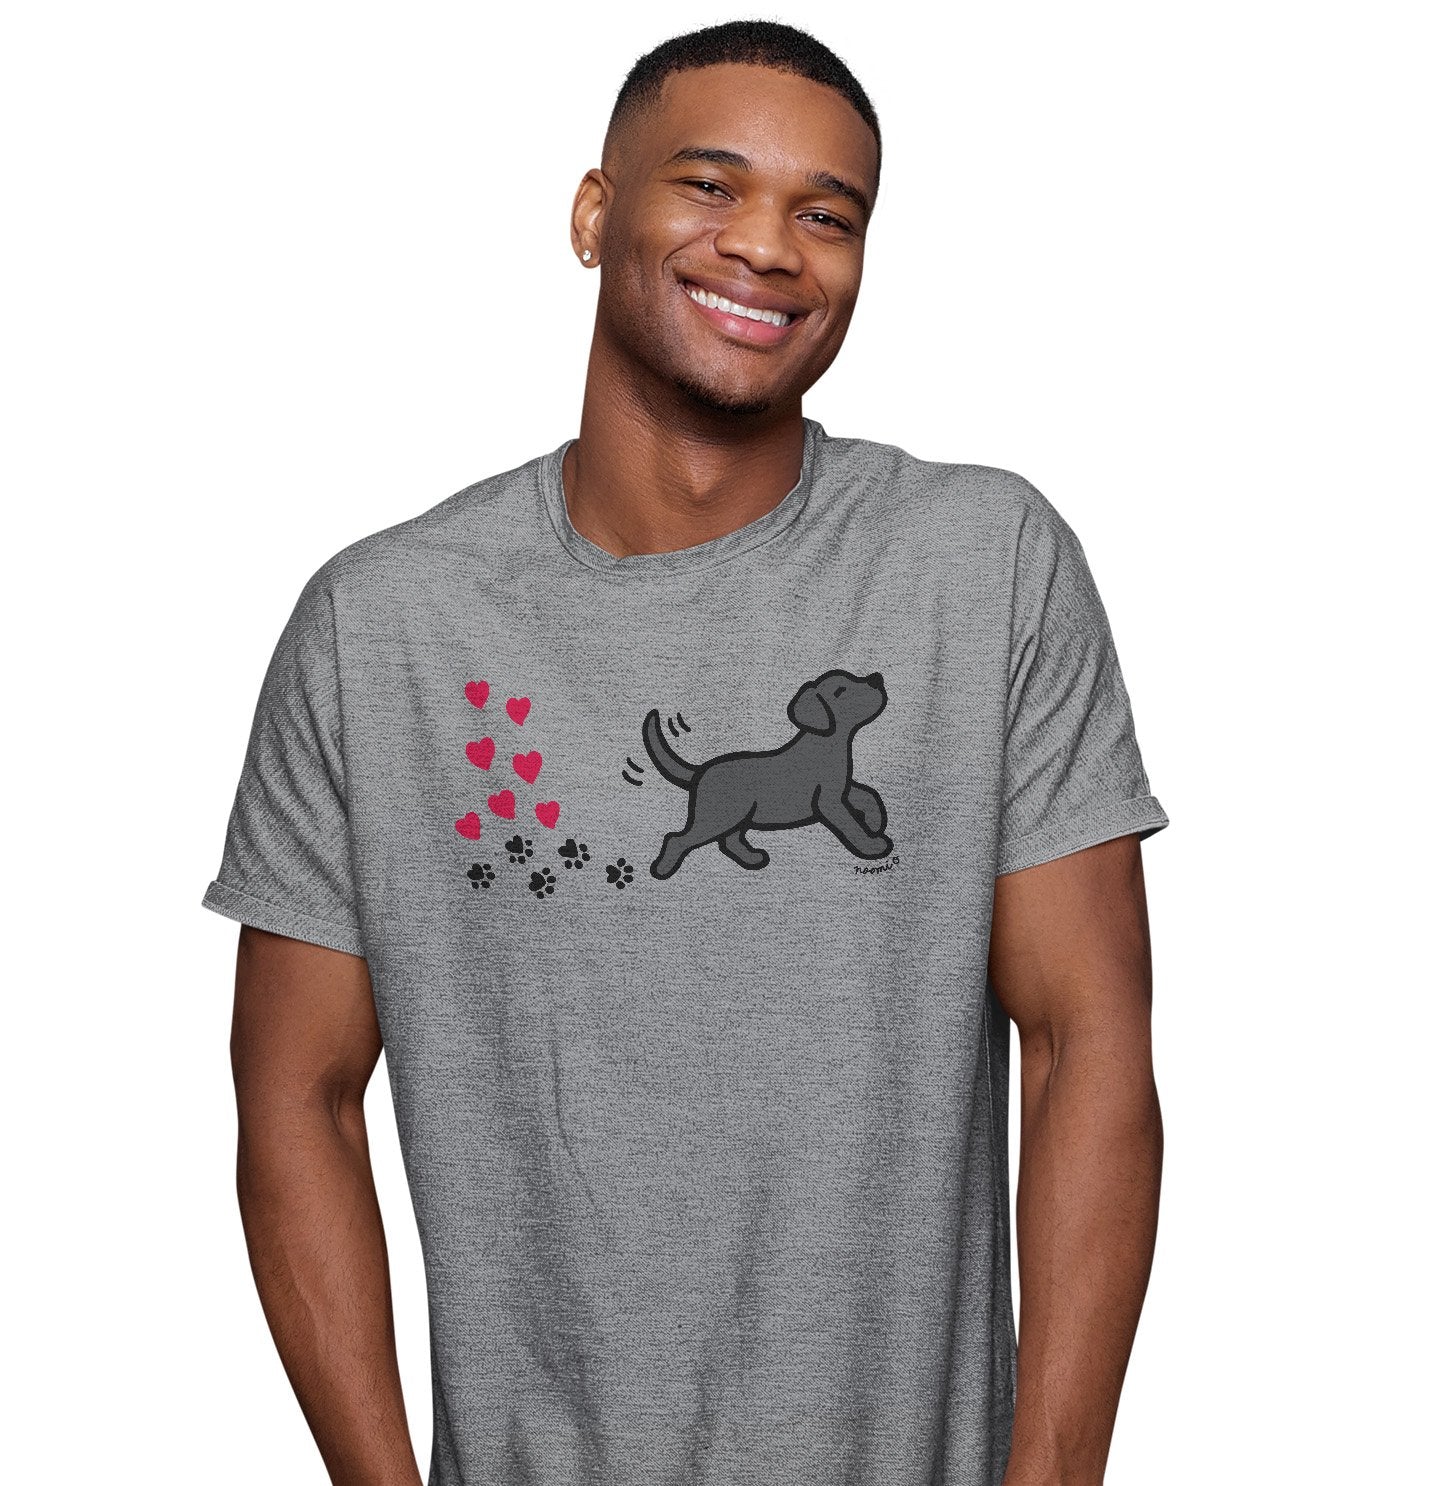 Black Labrador Love Trail - Adult Unisex T-Shirt